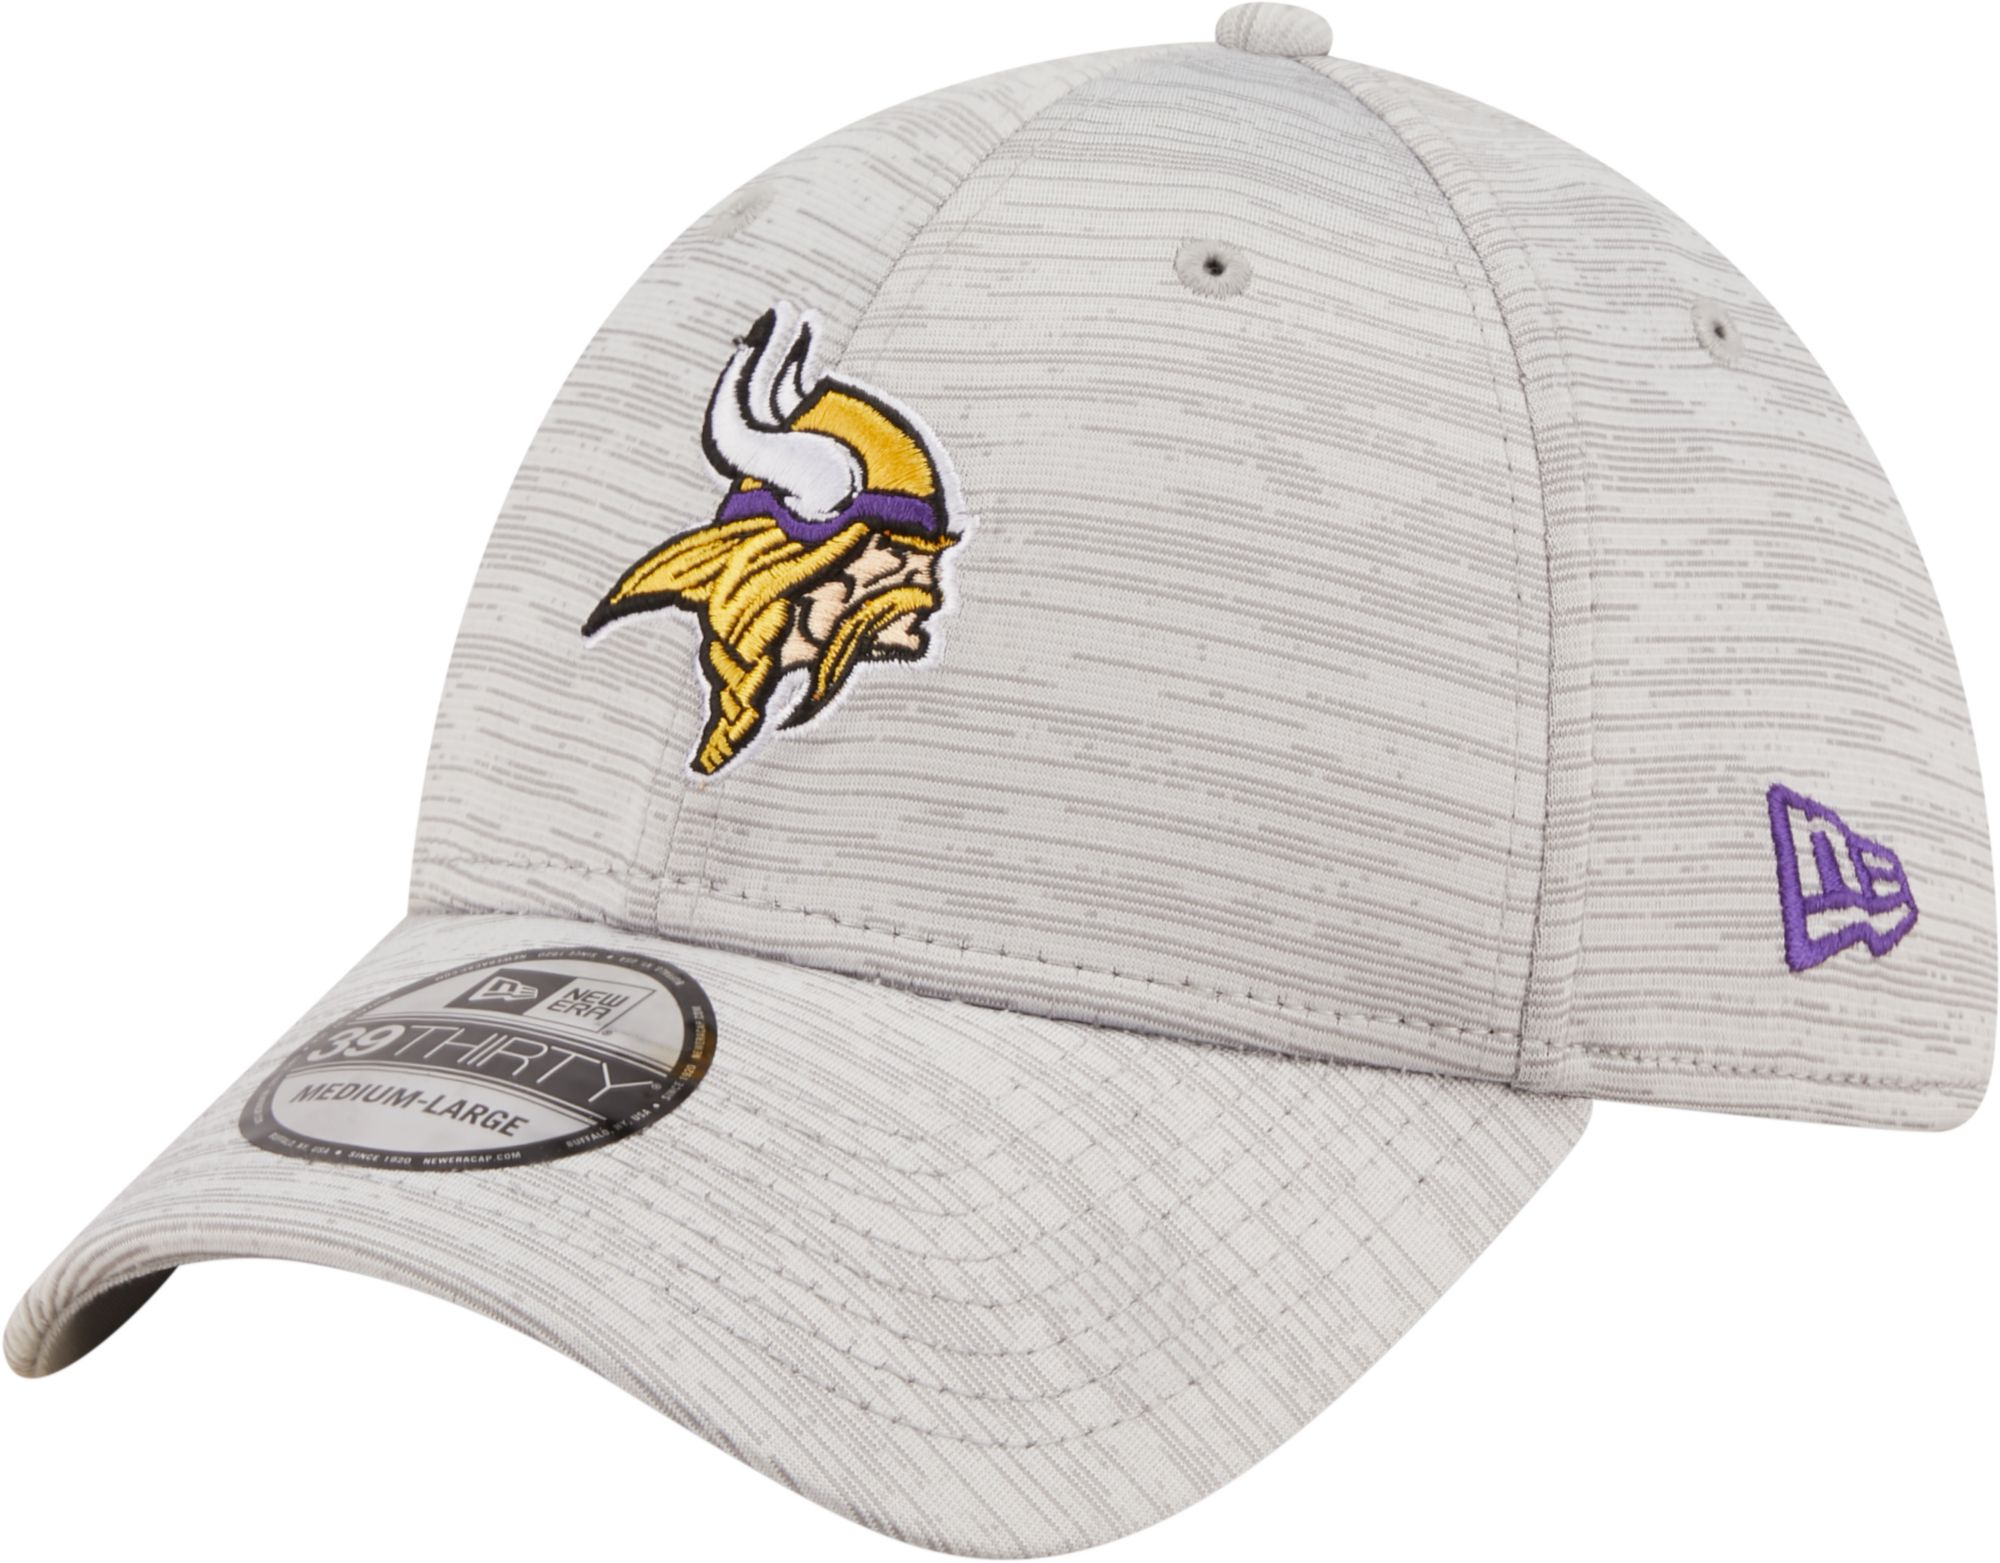 Minnesota Vikings snapback curved-brim cap